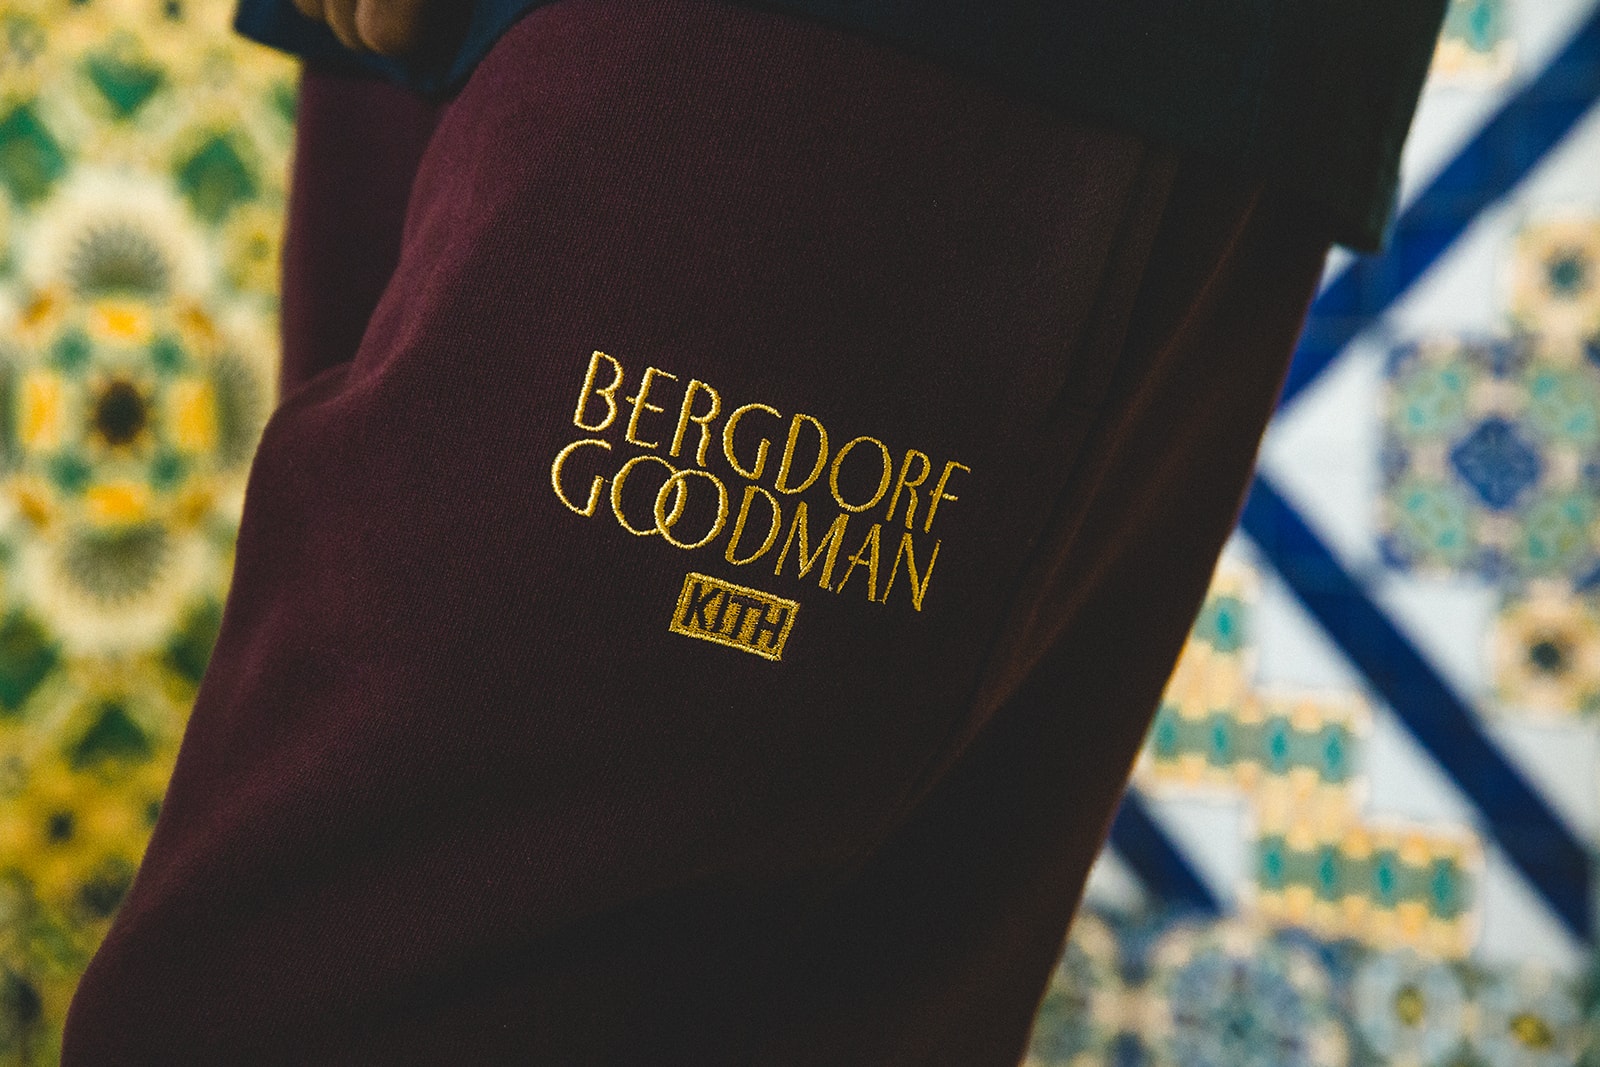 KITH x Bergdorf Goodman 2017 秋季聯乘系列 Lookbook